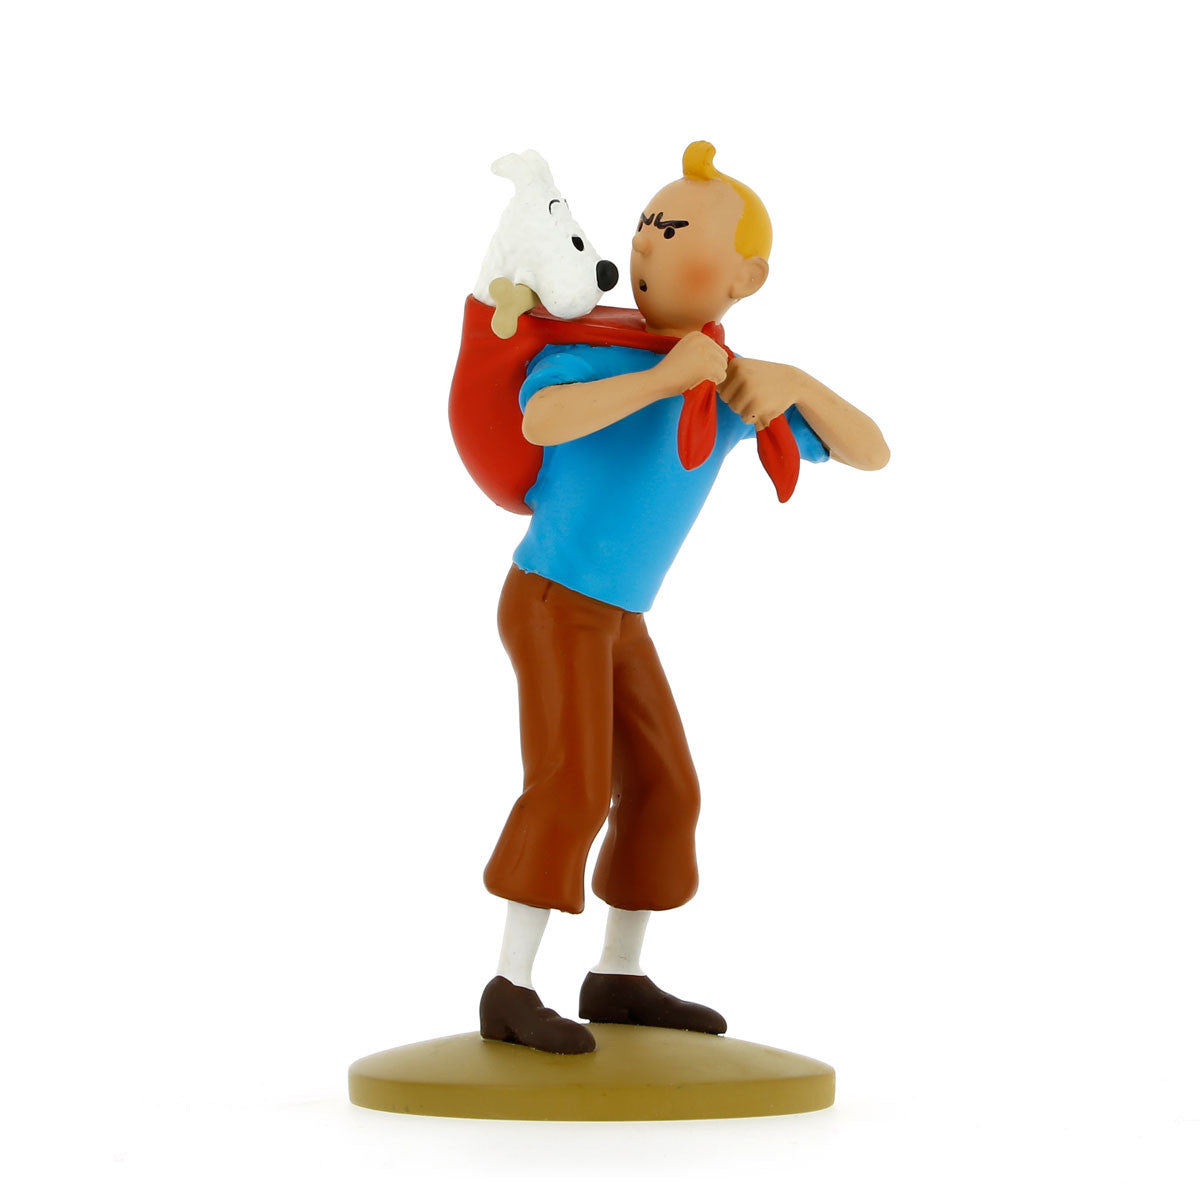 FIGURINE RESIN: Tintin Carrying Snowy